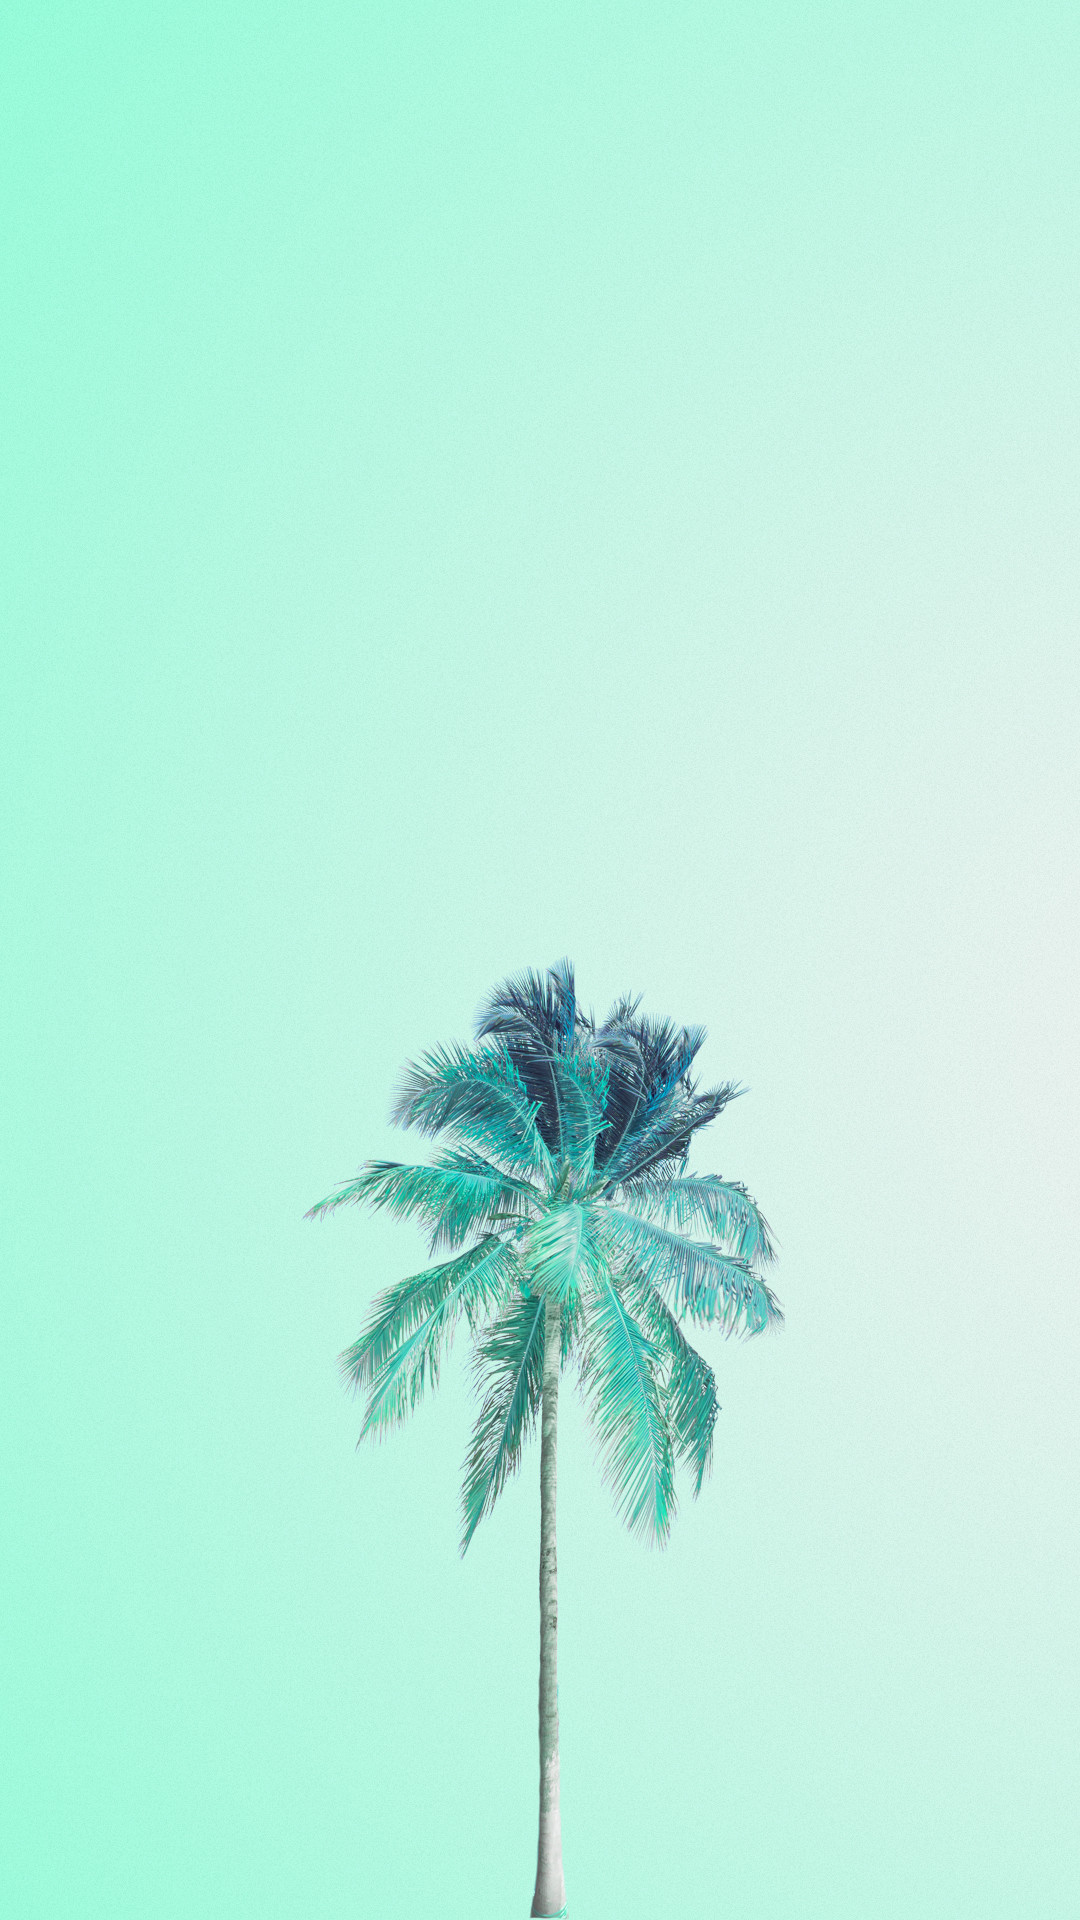 1080x1920 Mint green palm tree iphone wallpaper phone background lock screen